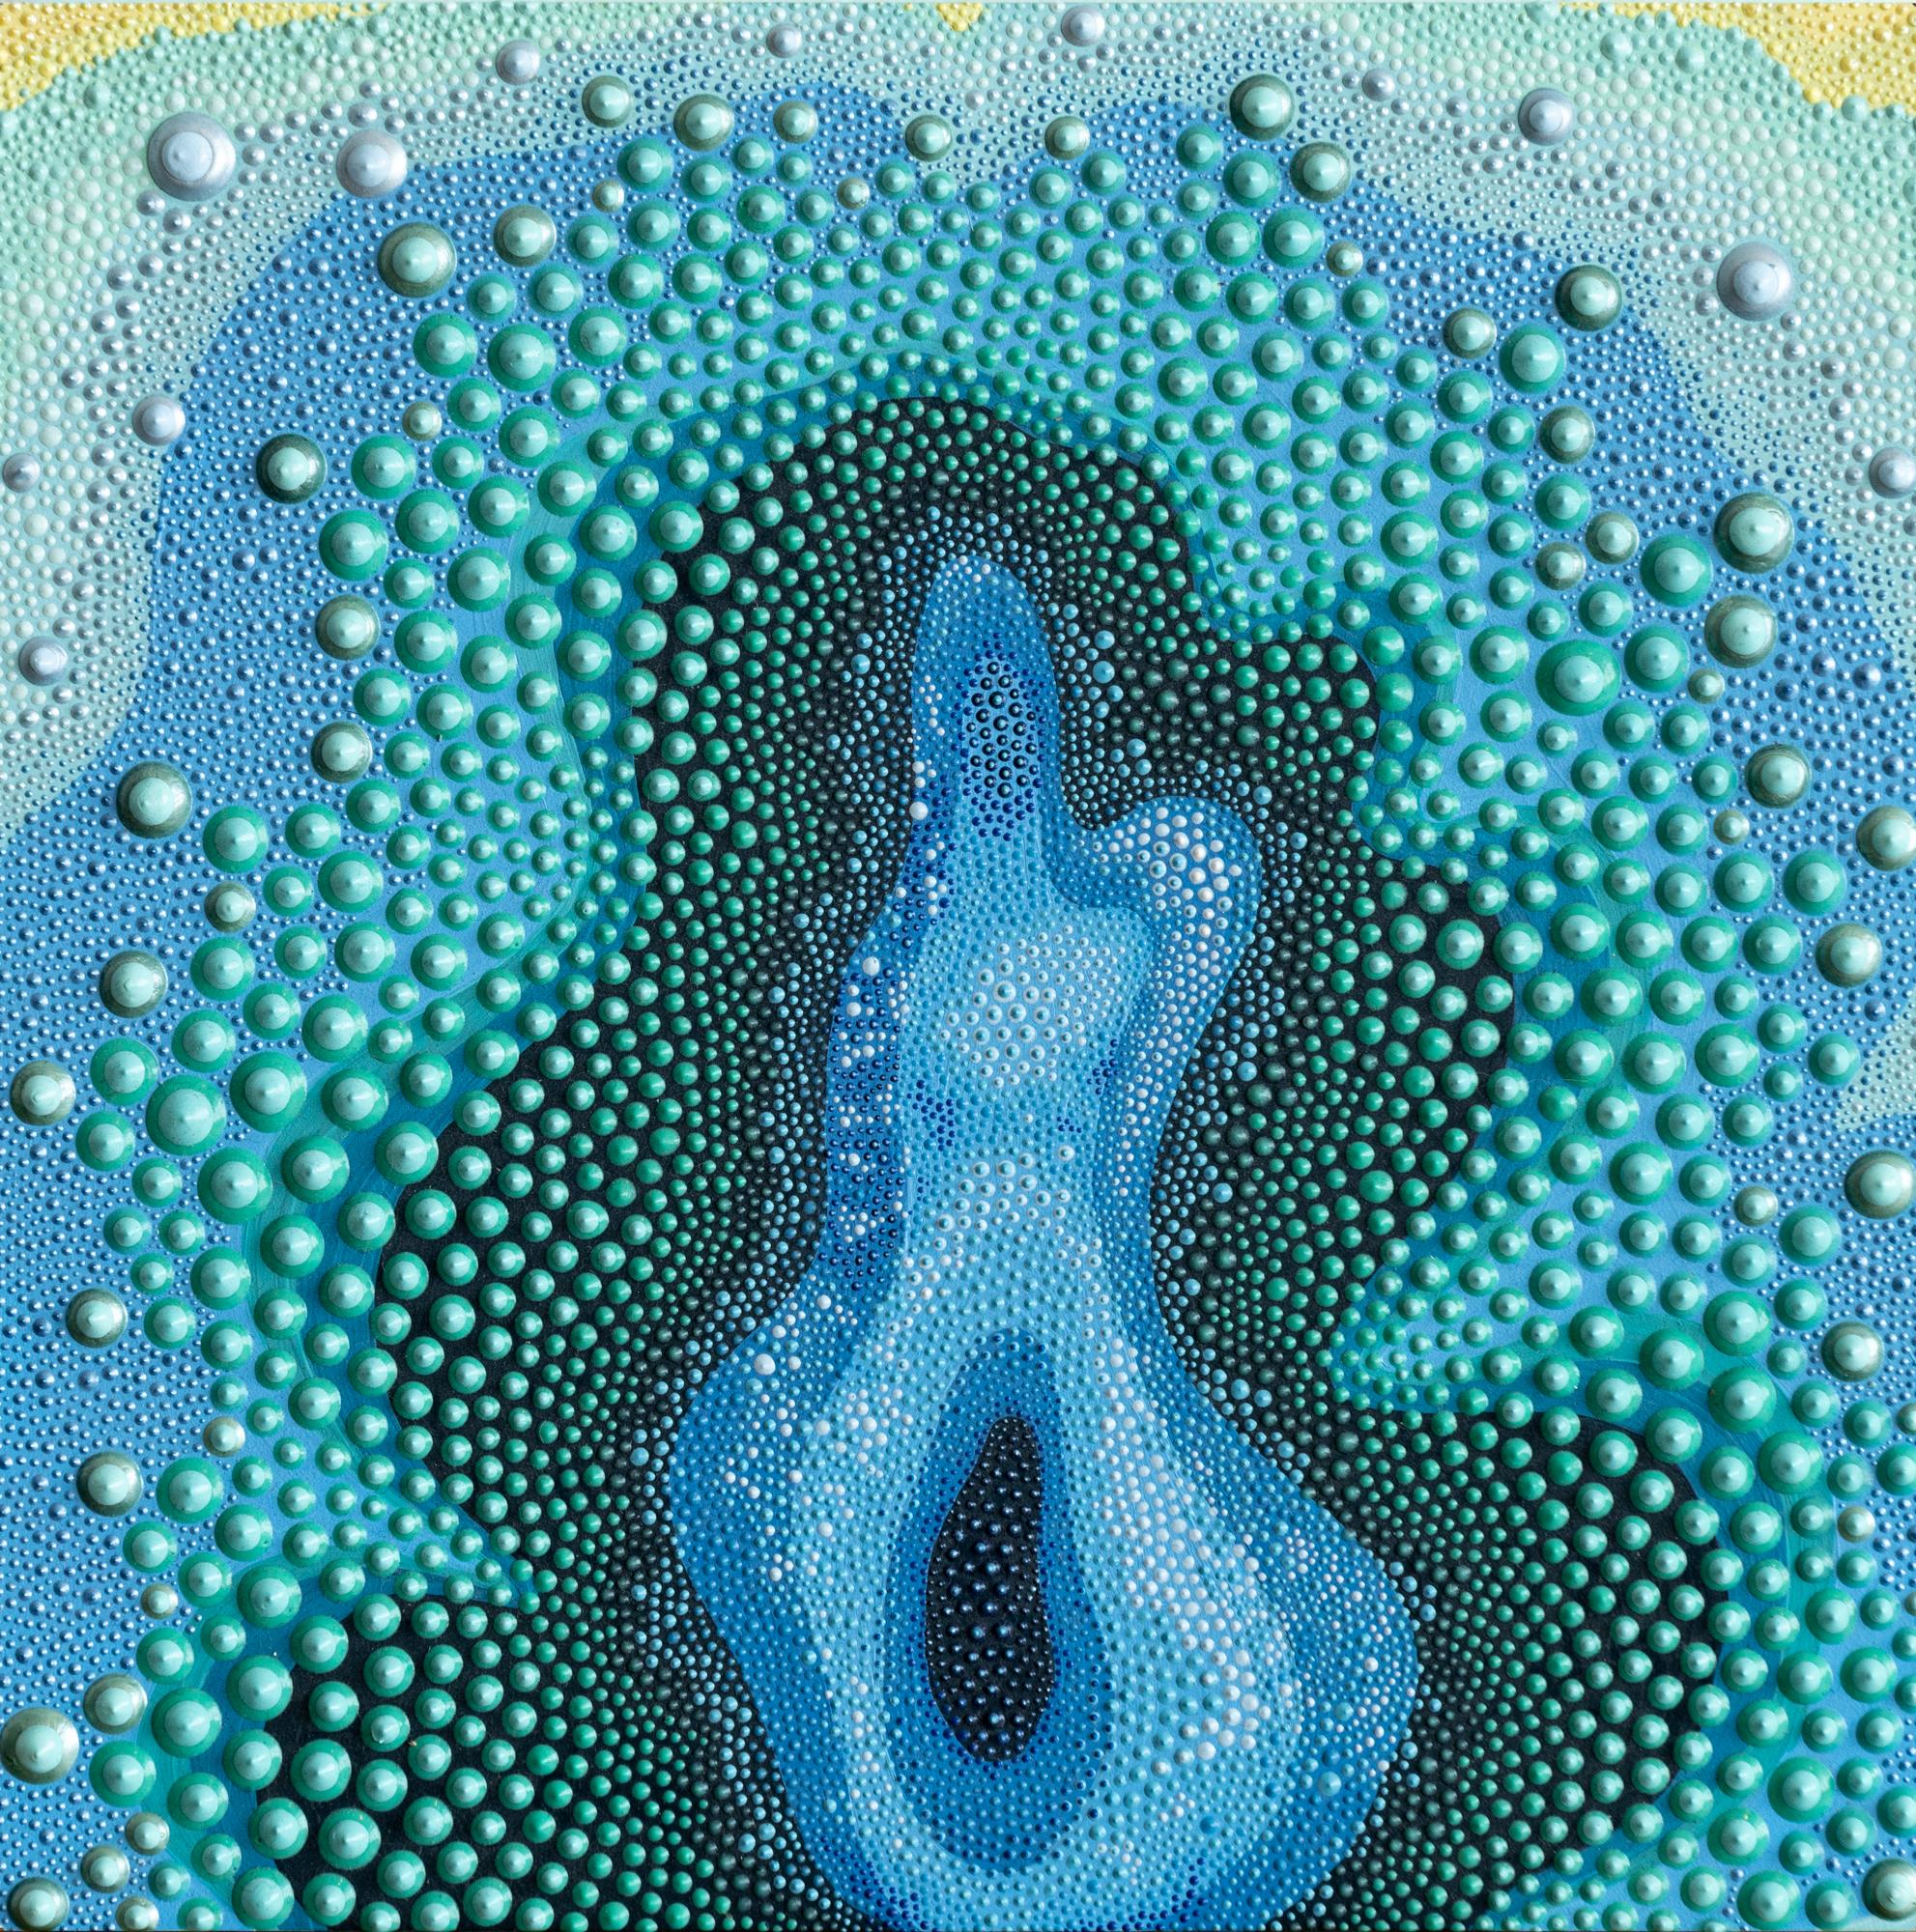 „Cultured Clam“ Aquatisch inspirierte, dimensionale Farbe auf Leinwand